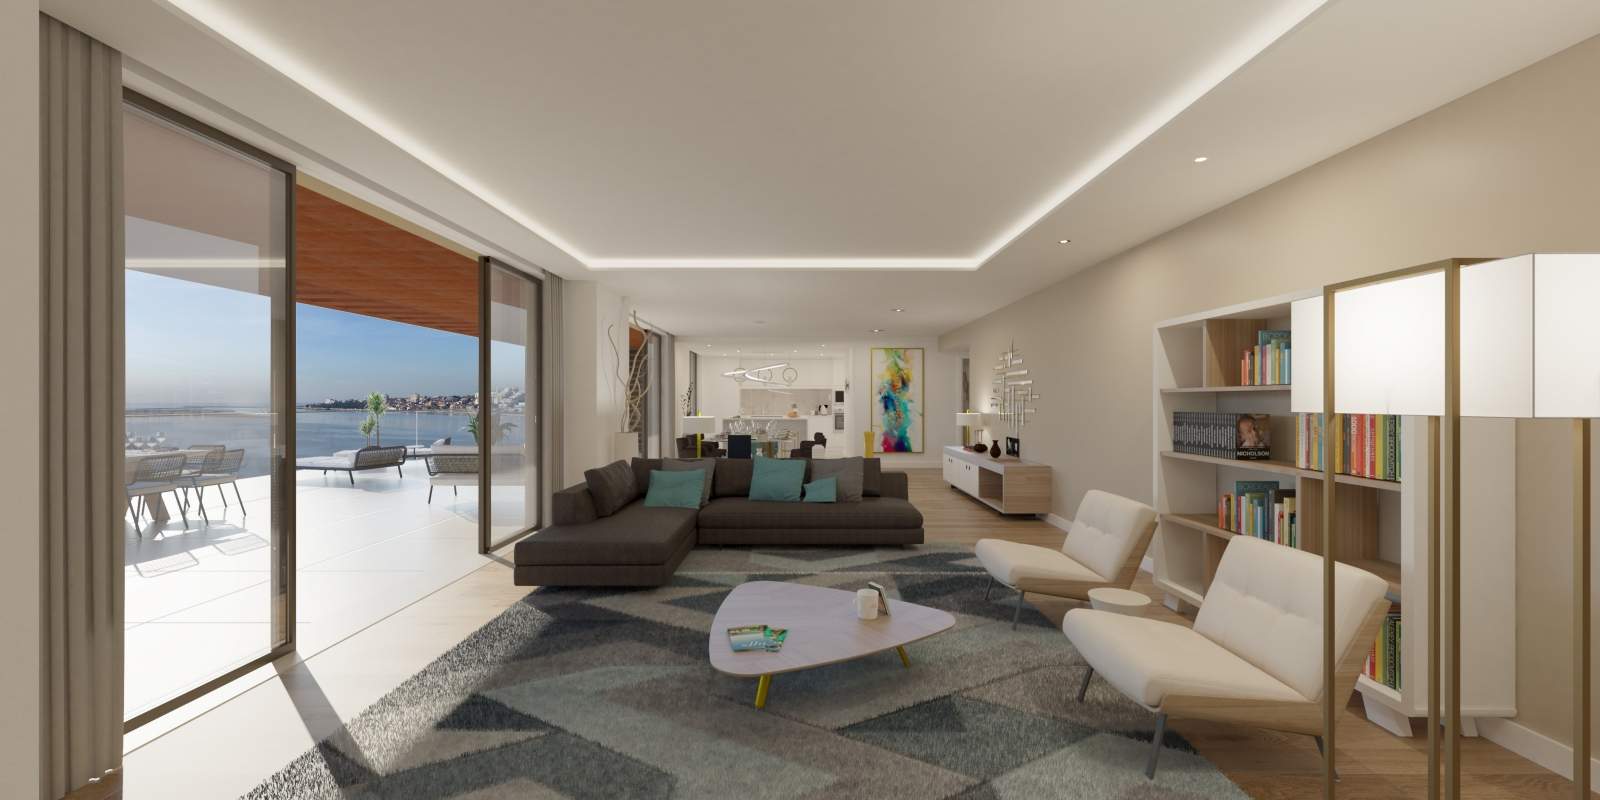 Apartment for sale with terrace, in exclusive condominium, V. N. Gaia, Porto, Portugal_175429